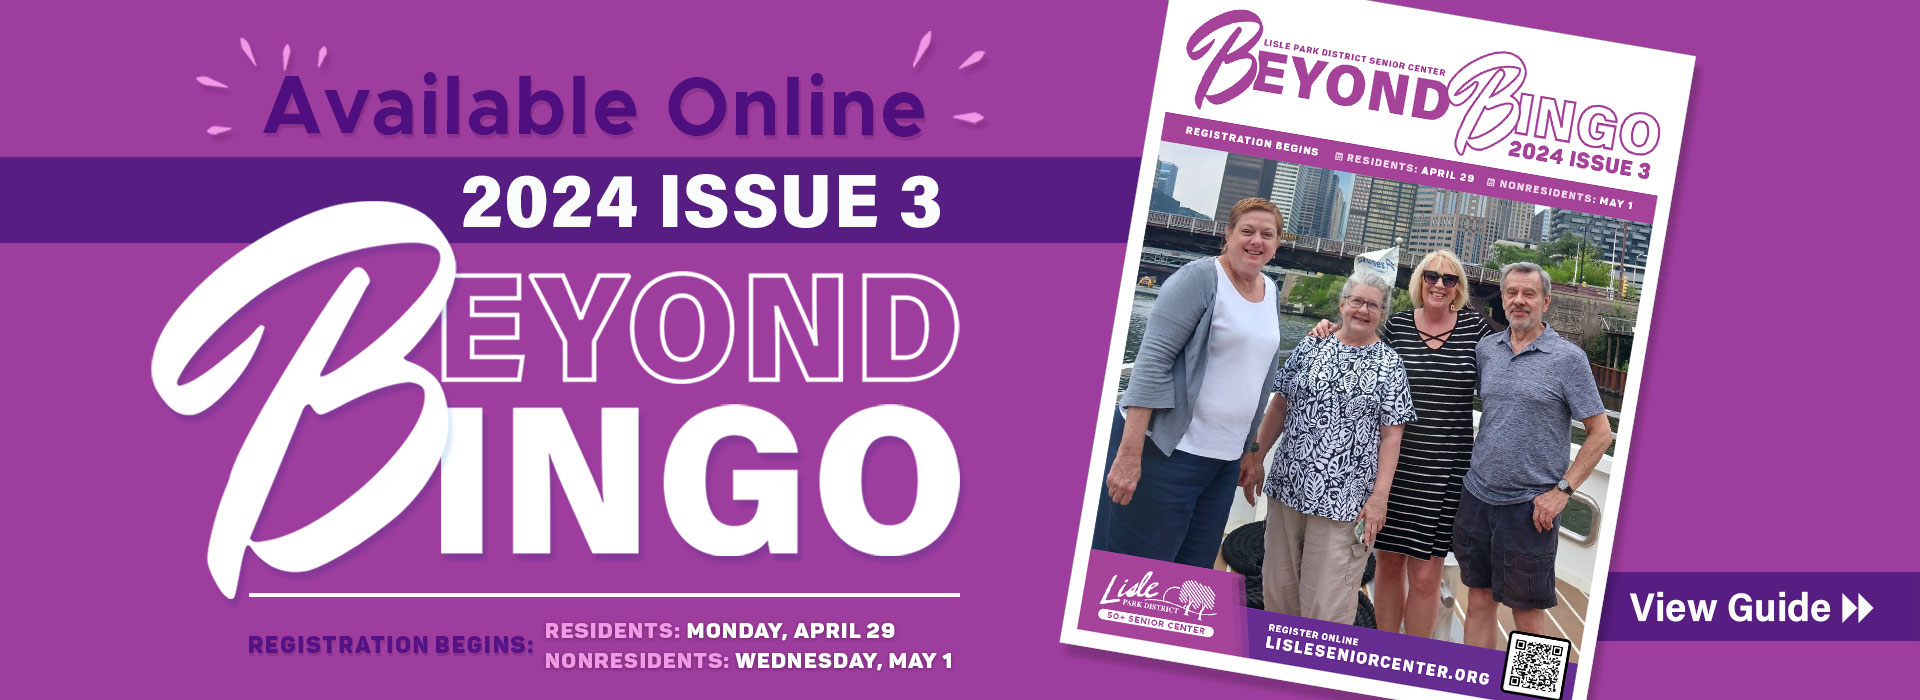 50+ Beyond Bingo 2024 Issue 3 Program Guide